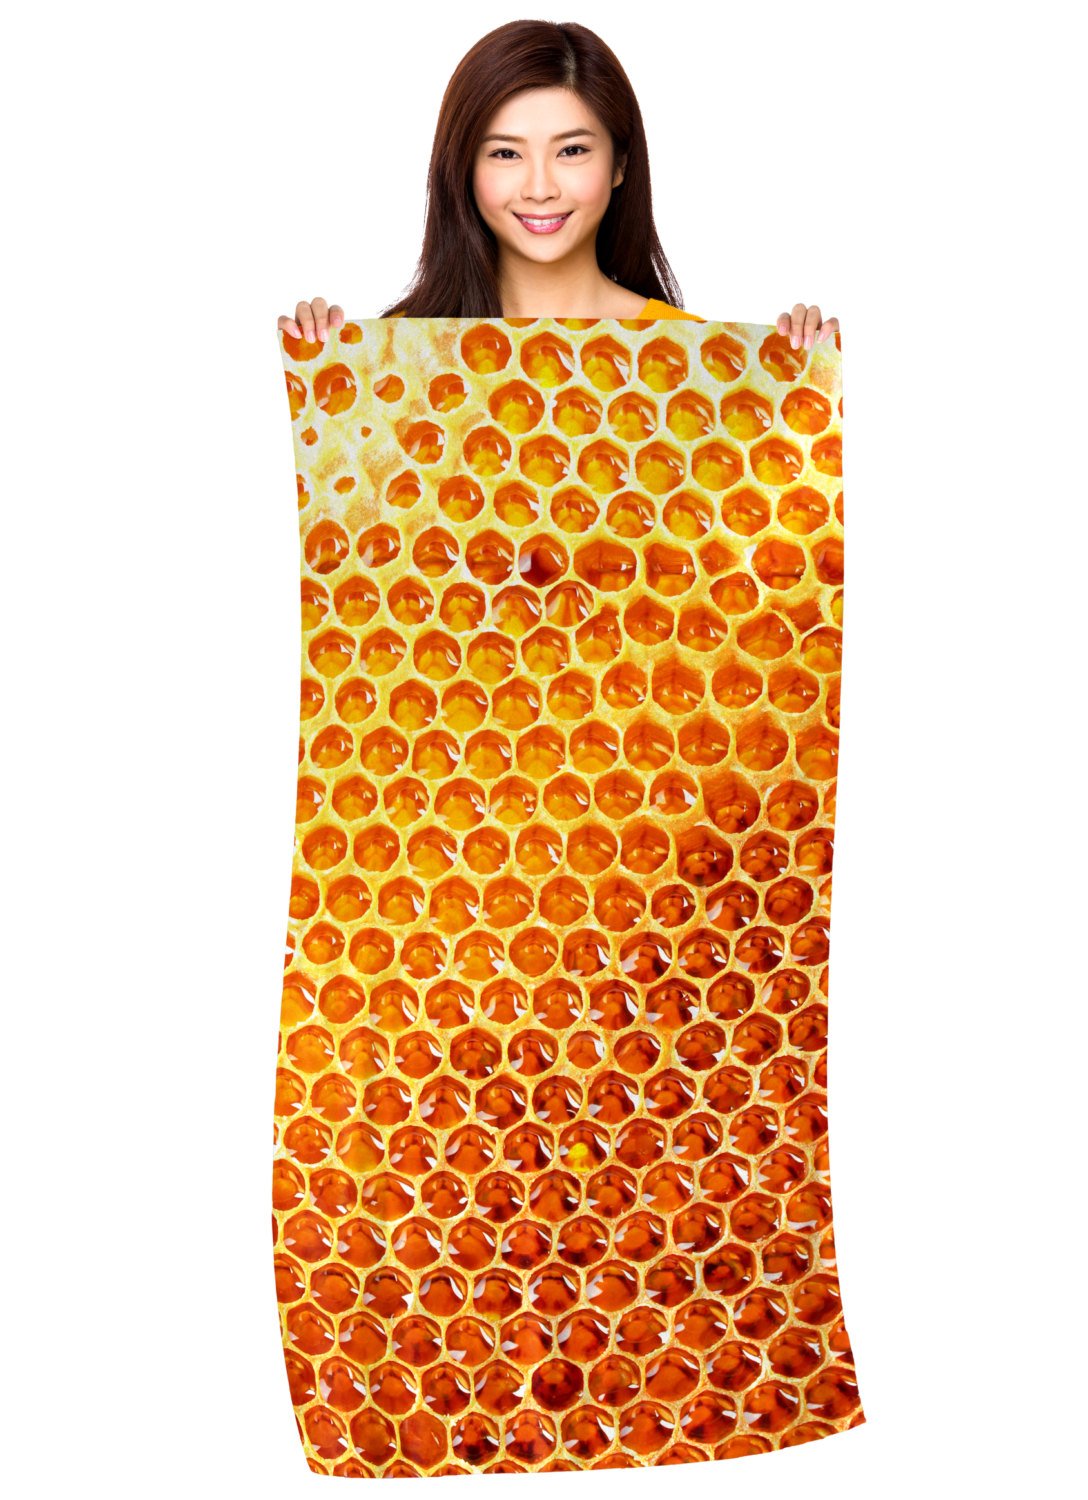 Sweet Honeycomb - Microfiber Beach Towel